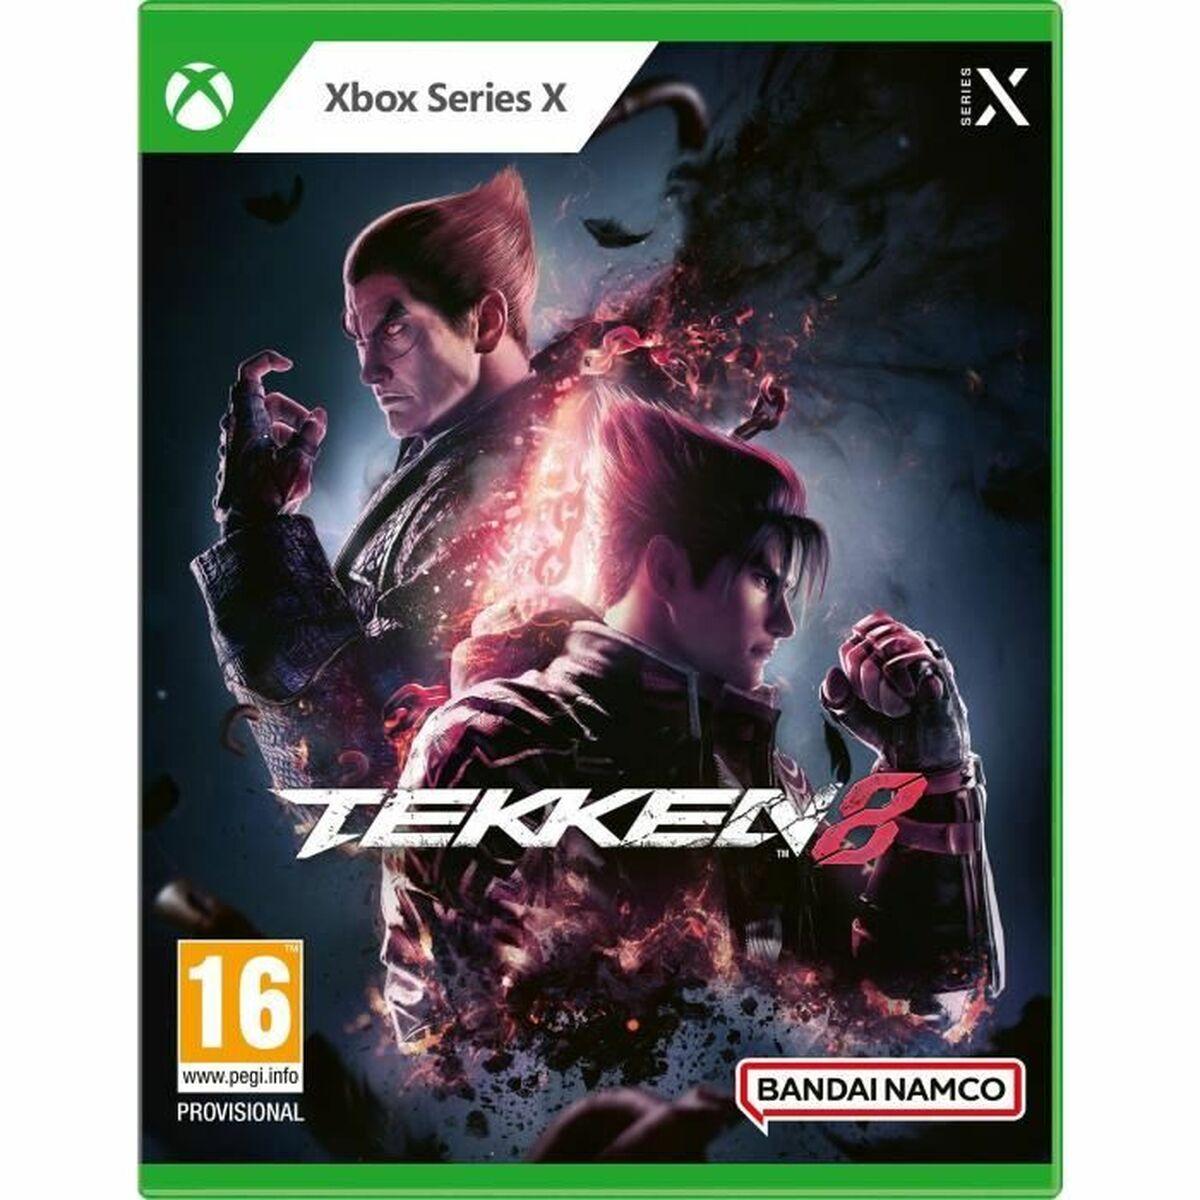 Electronique Xbox Series X Bandai Namco Tekken 8 video game (EN)